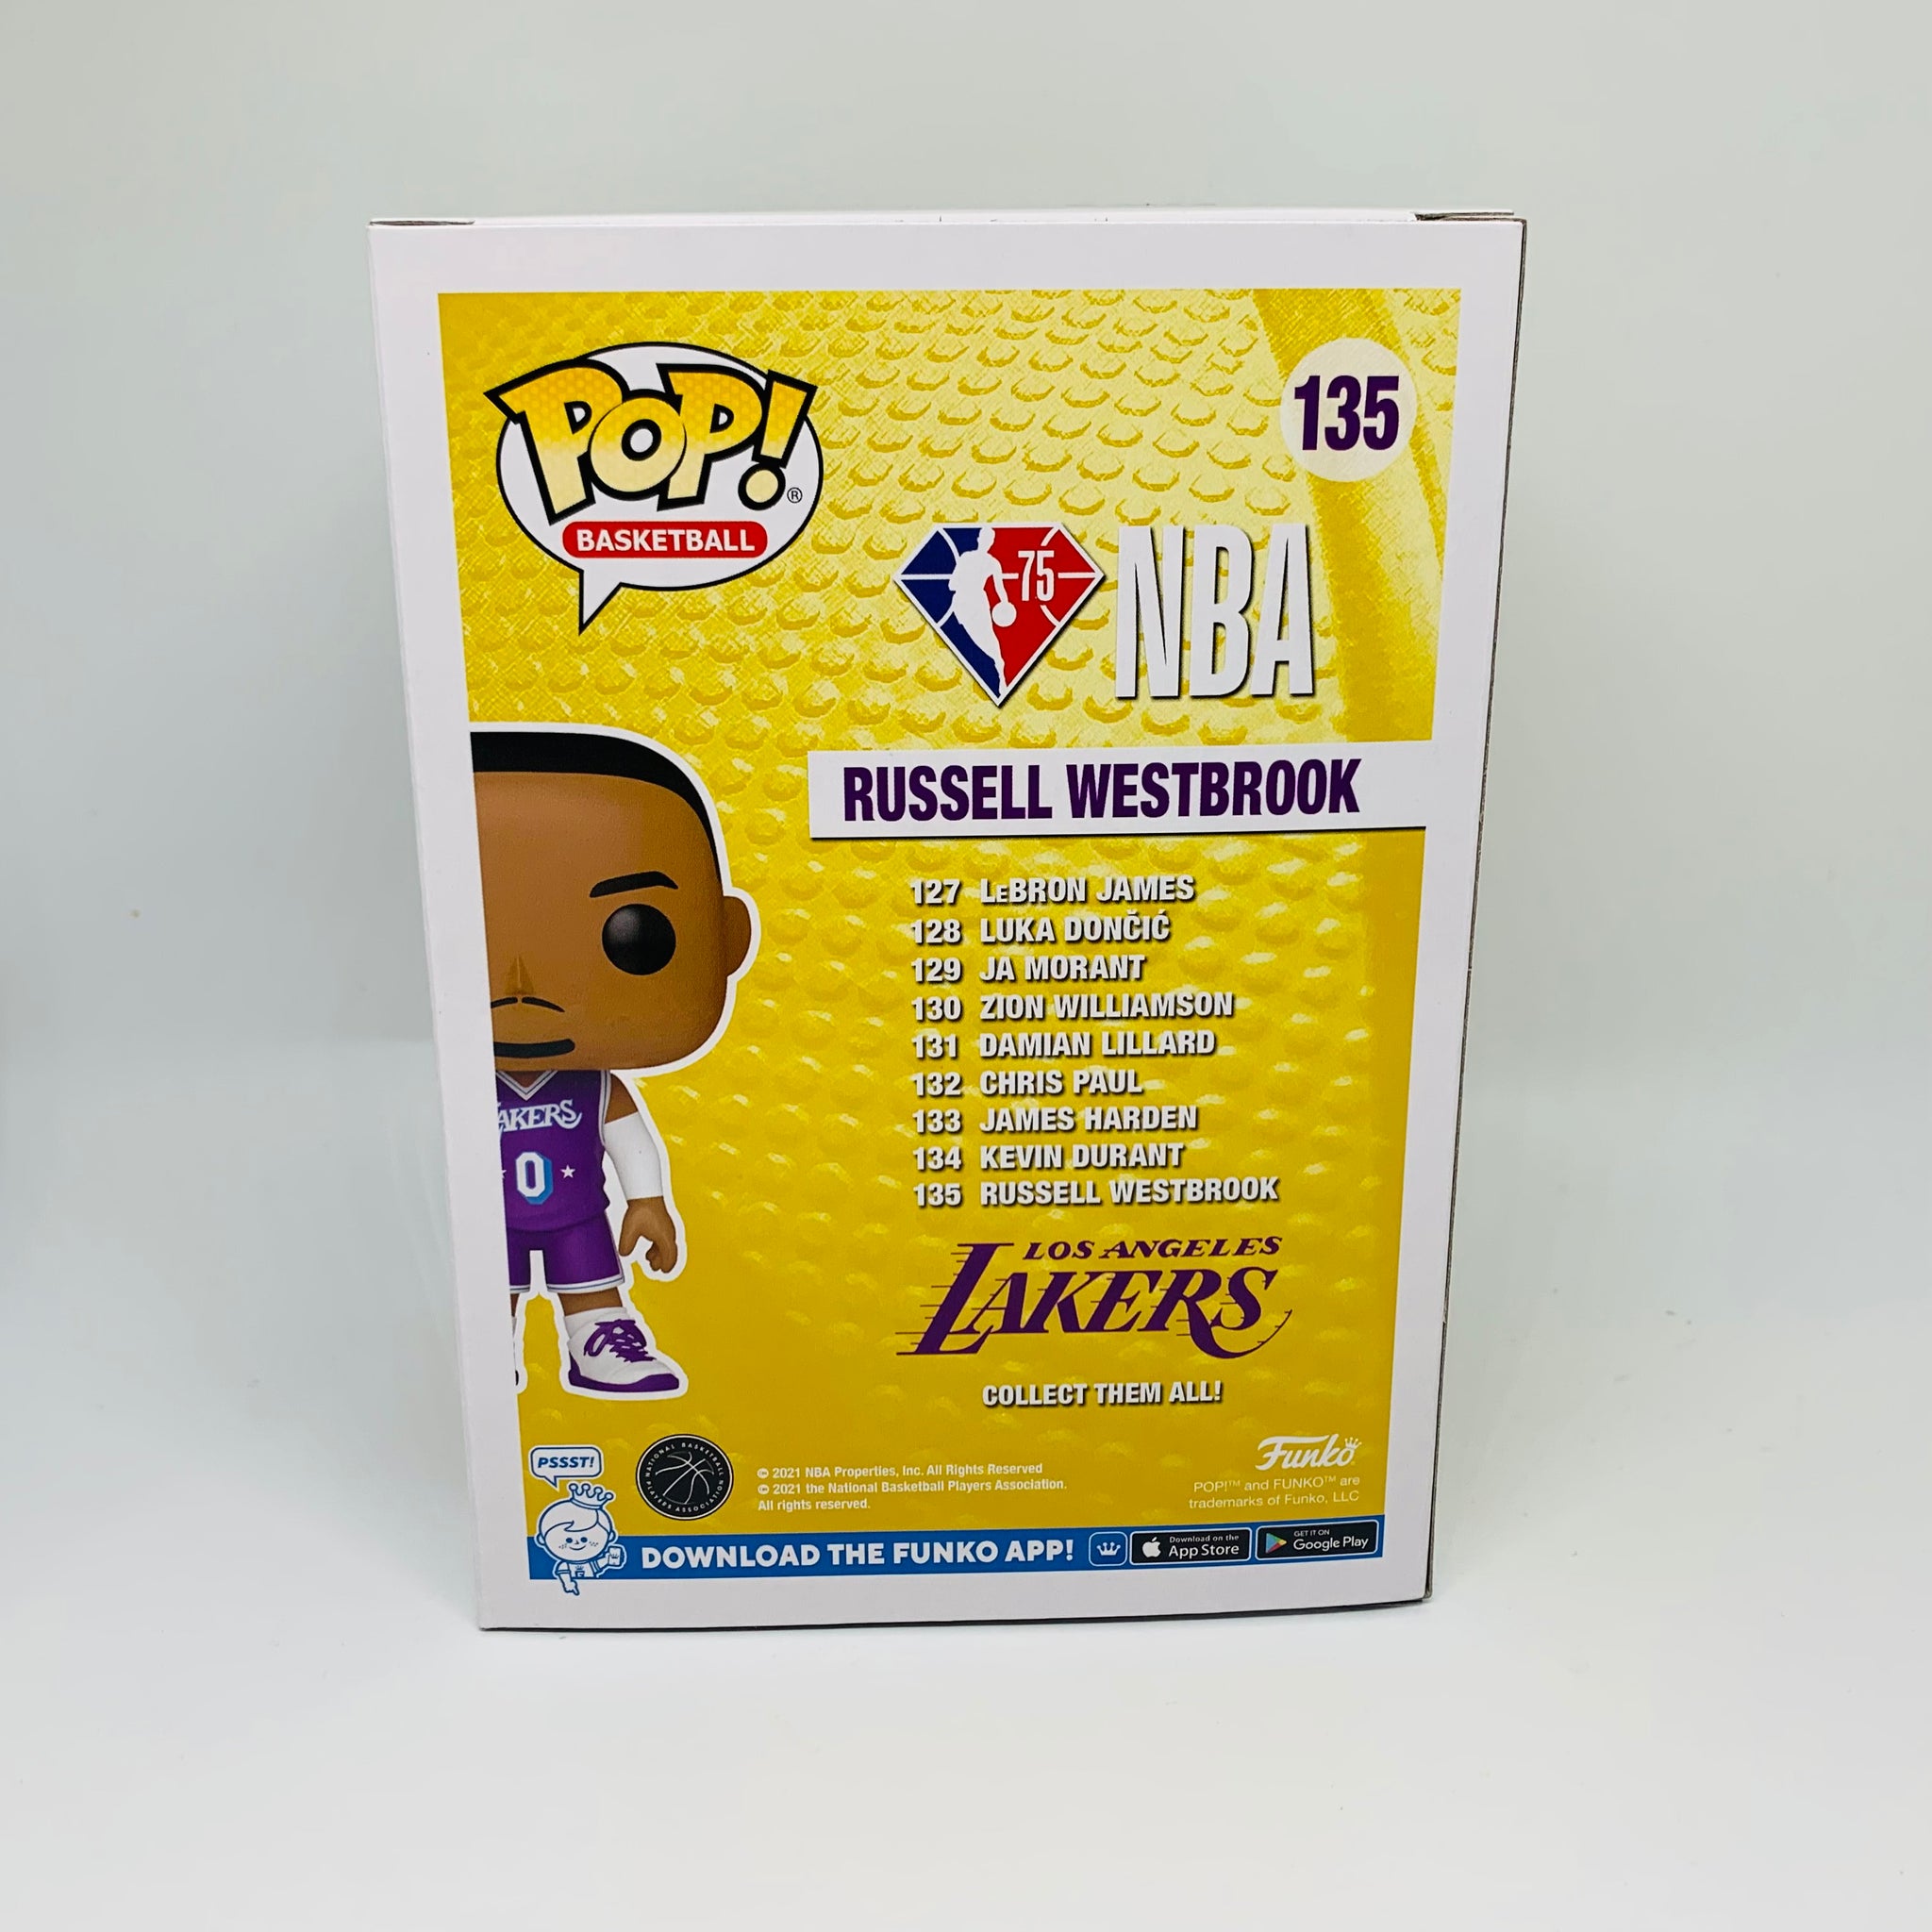 NBA Lakers Russell Westbrook (City Edition 2021) Pop! Vinyl Figure